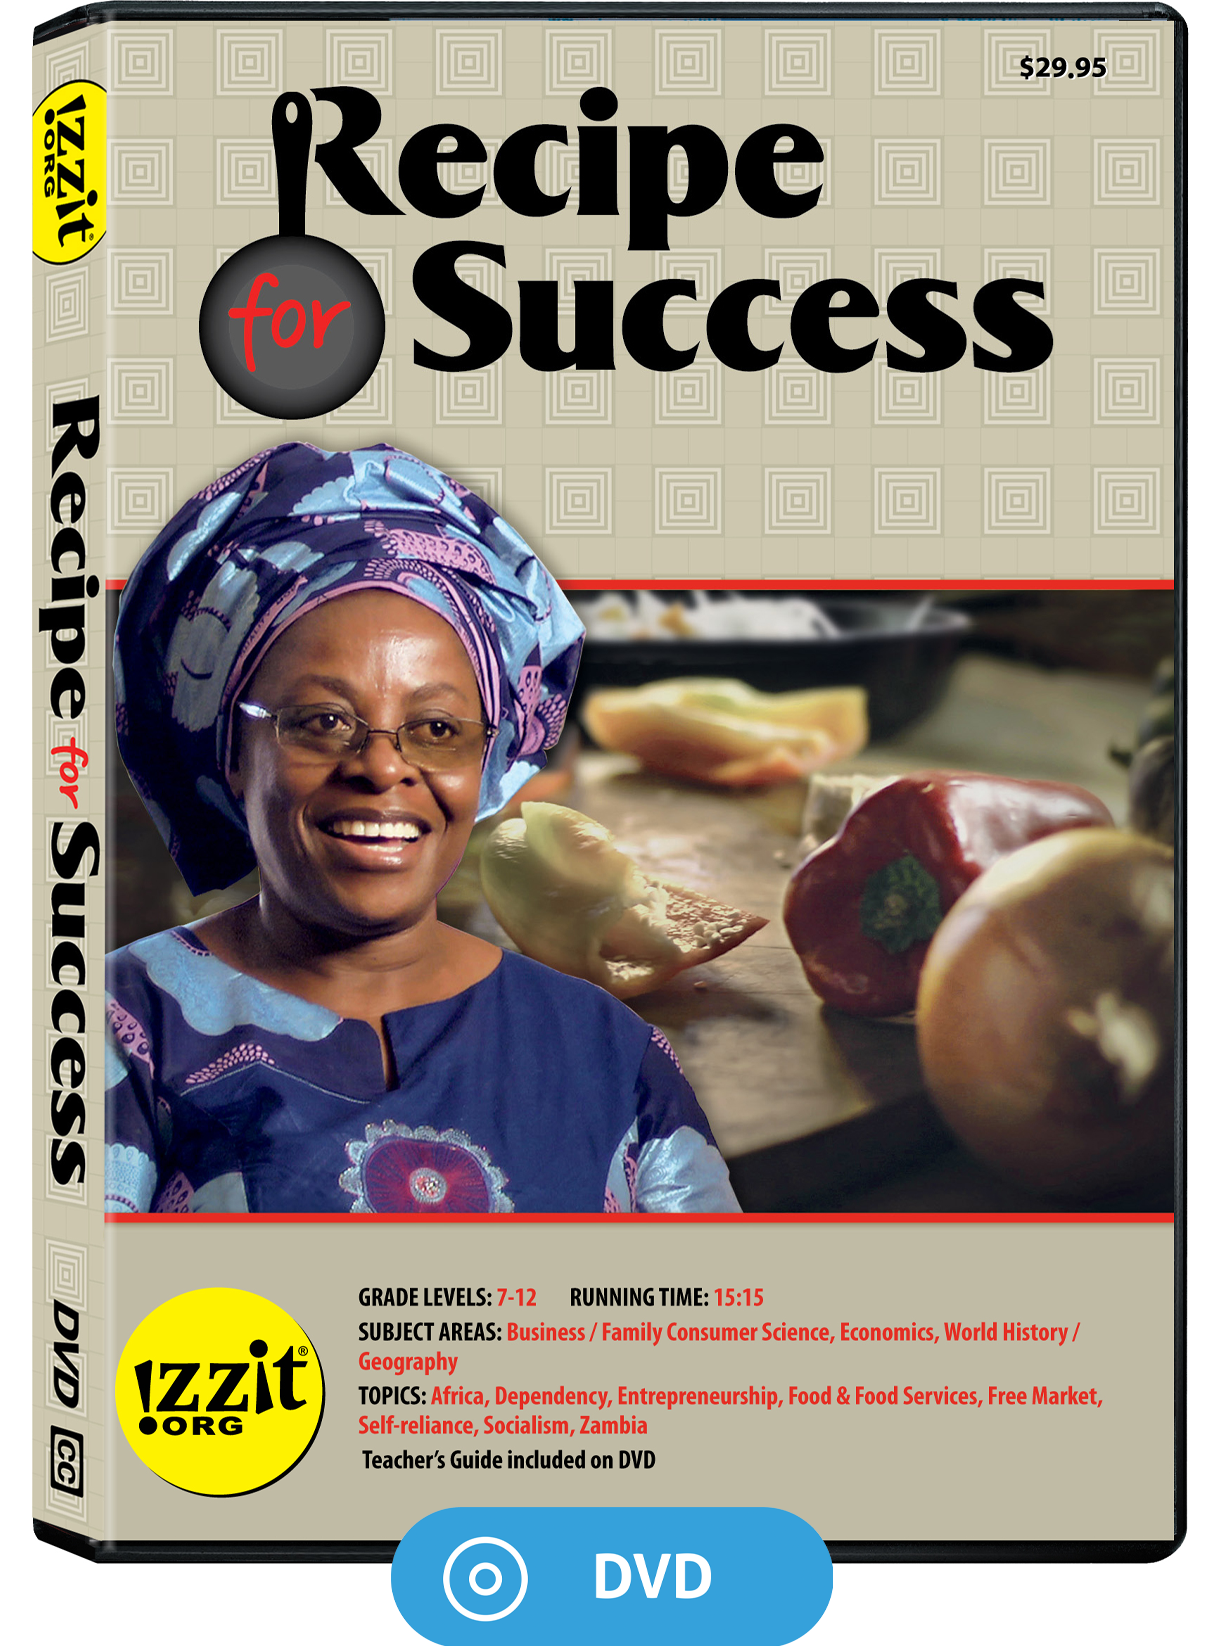 Recipe for Success DVD